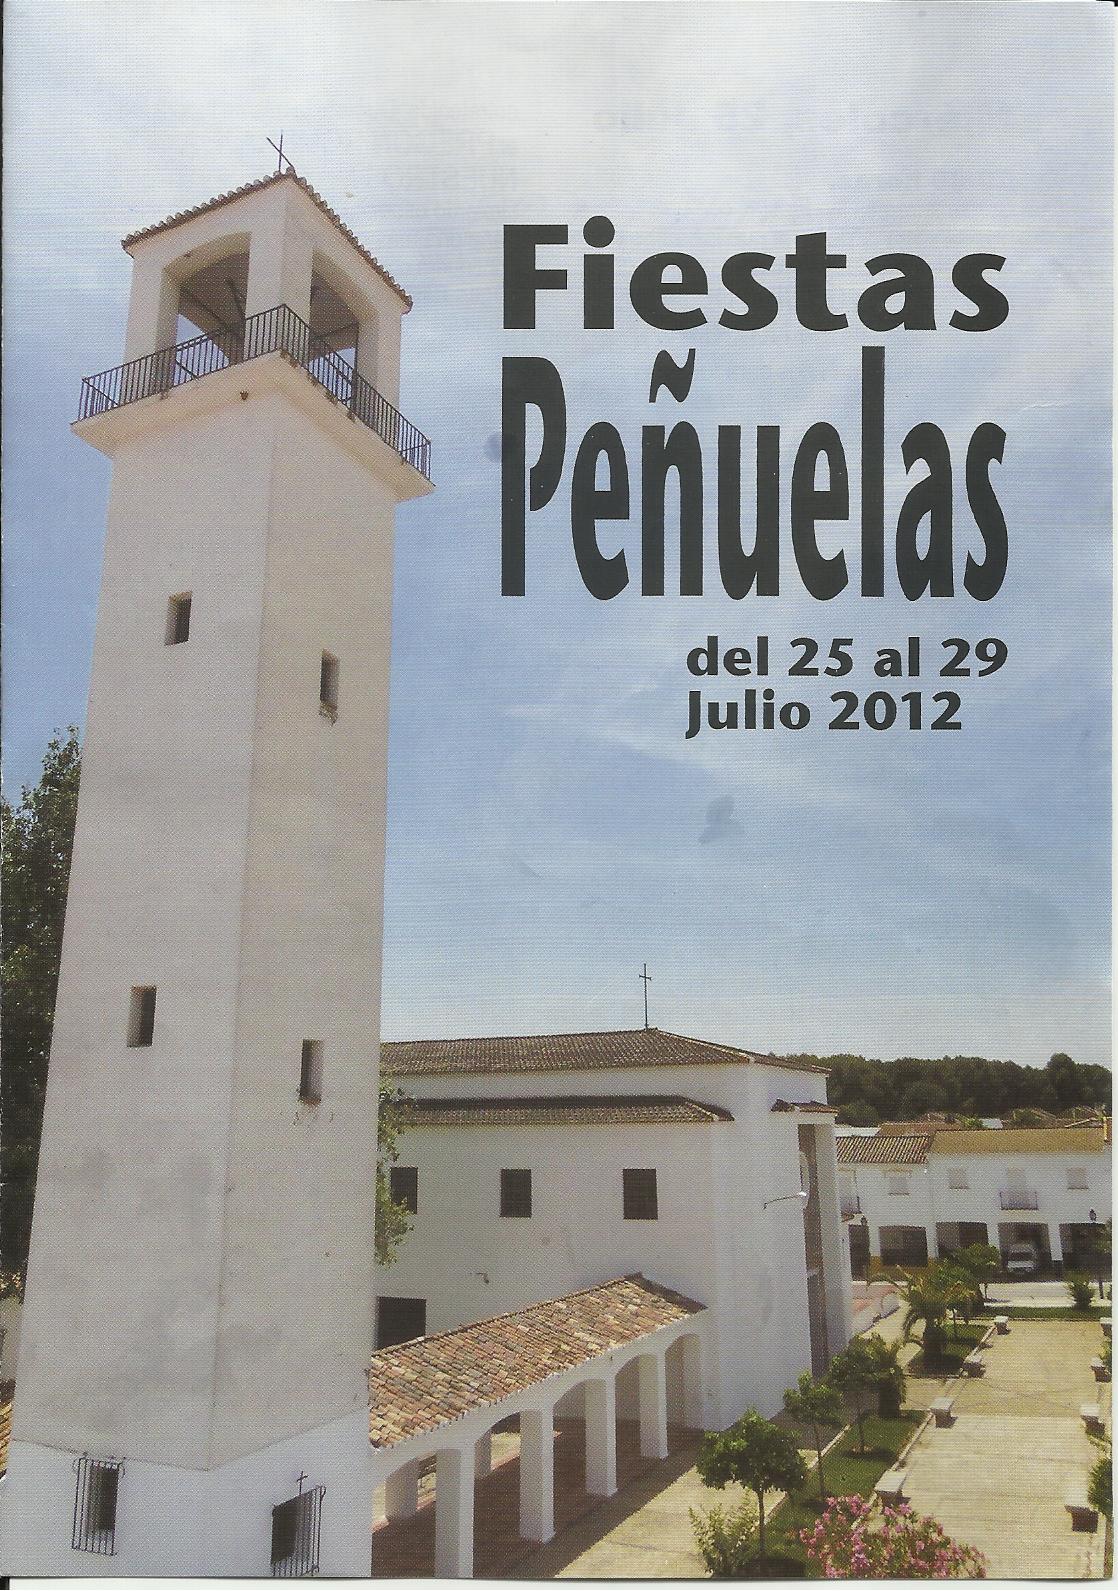 Fiestas de Peuelas 2012